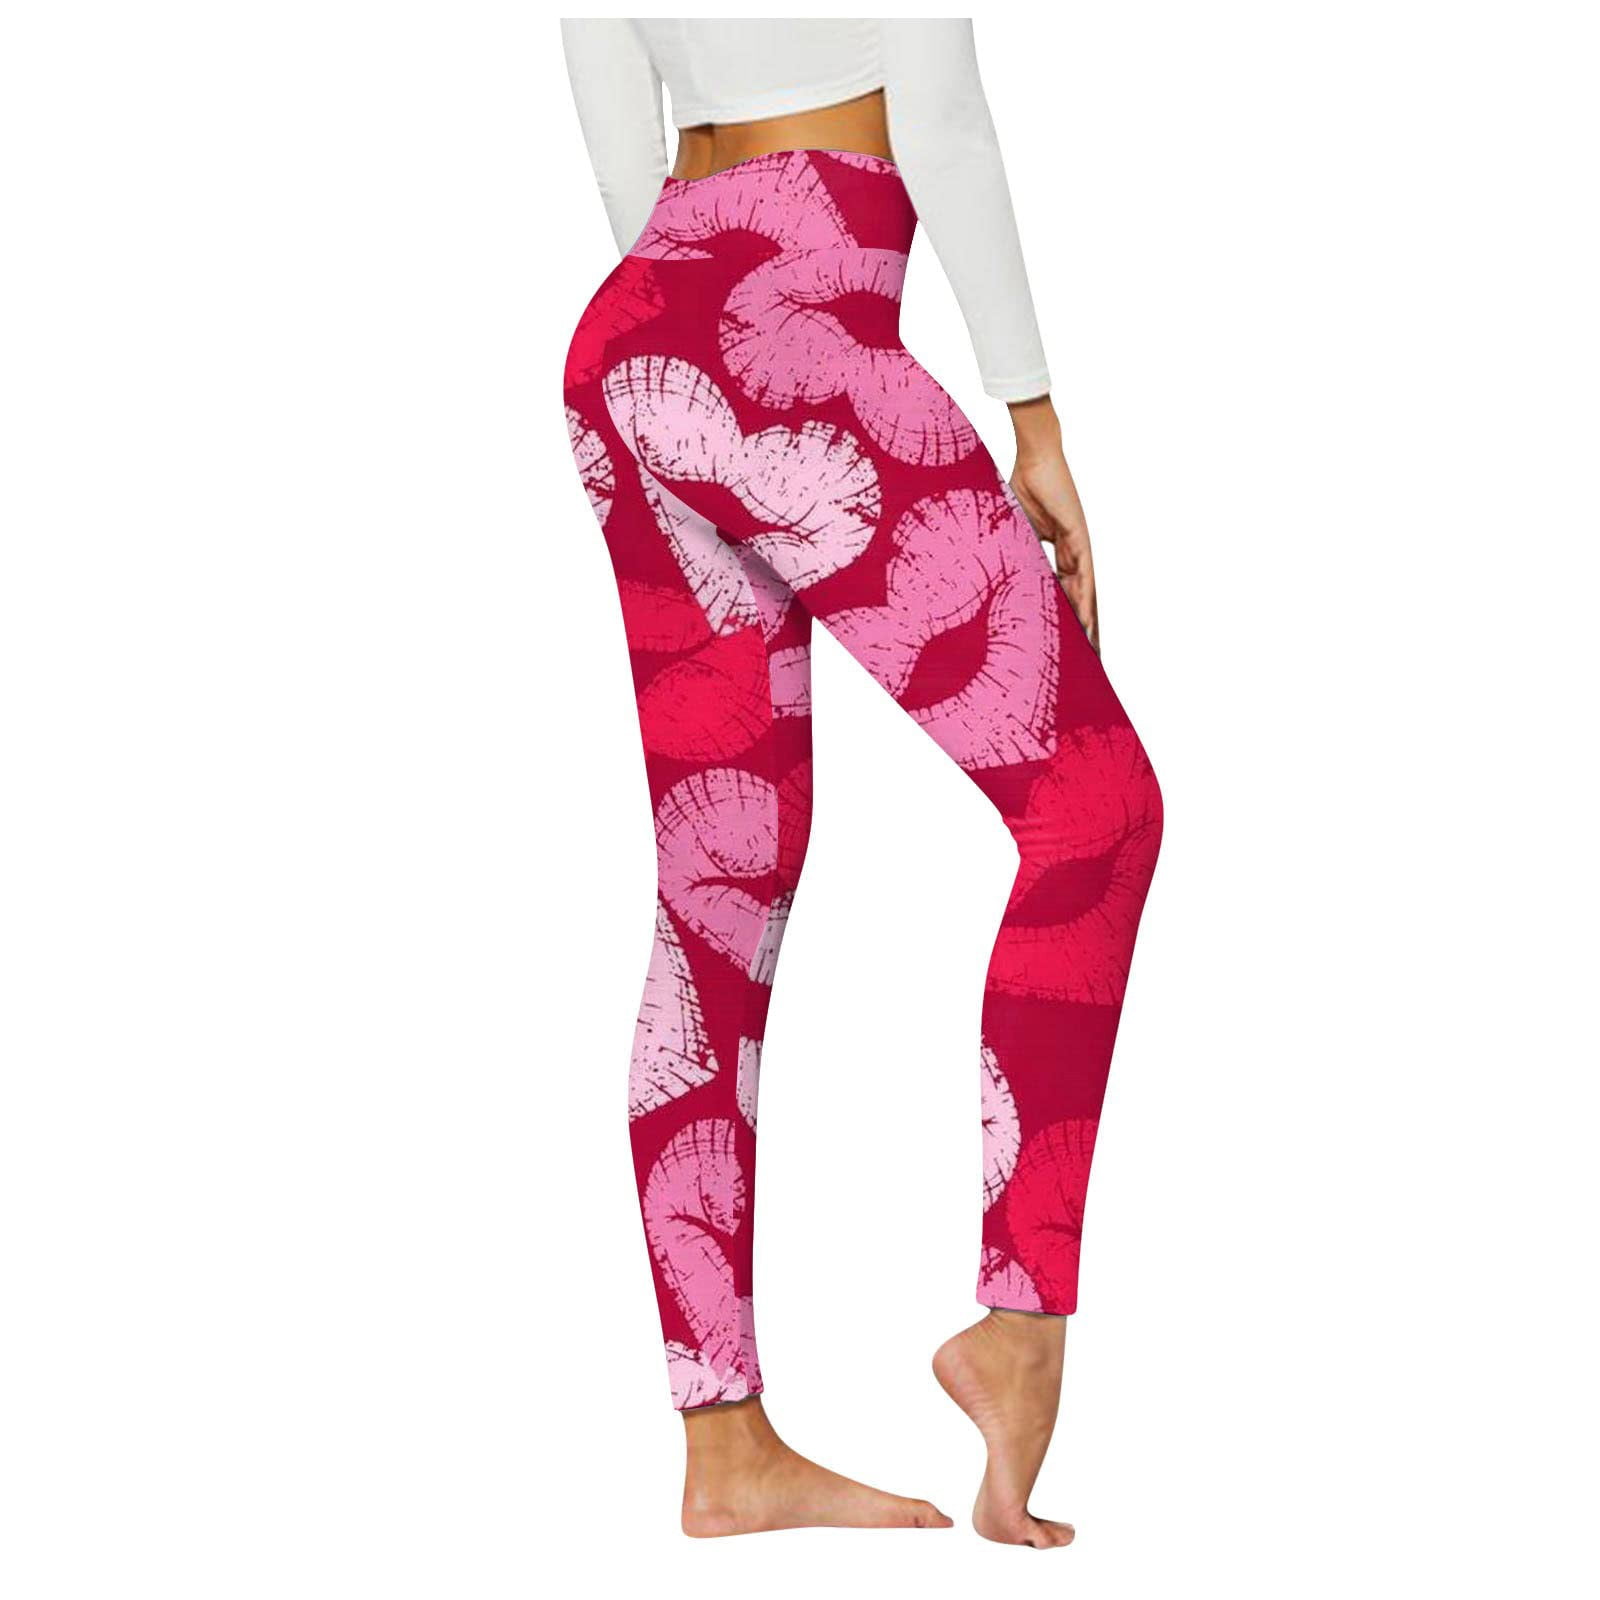 SMihono Save Big Yoga Pants for Women Casual Yoga Full Length